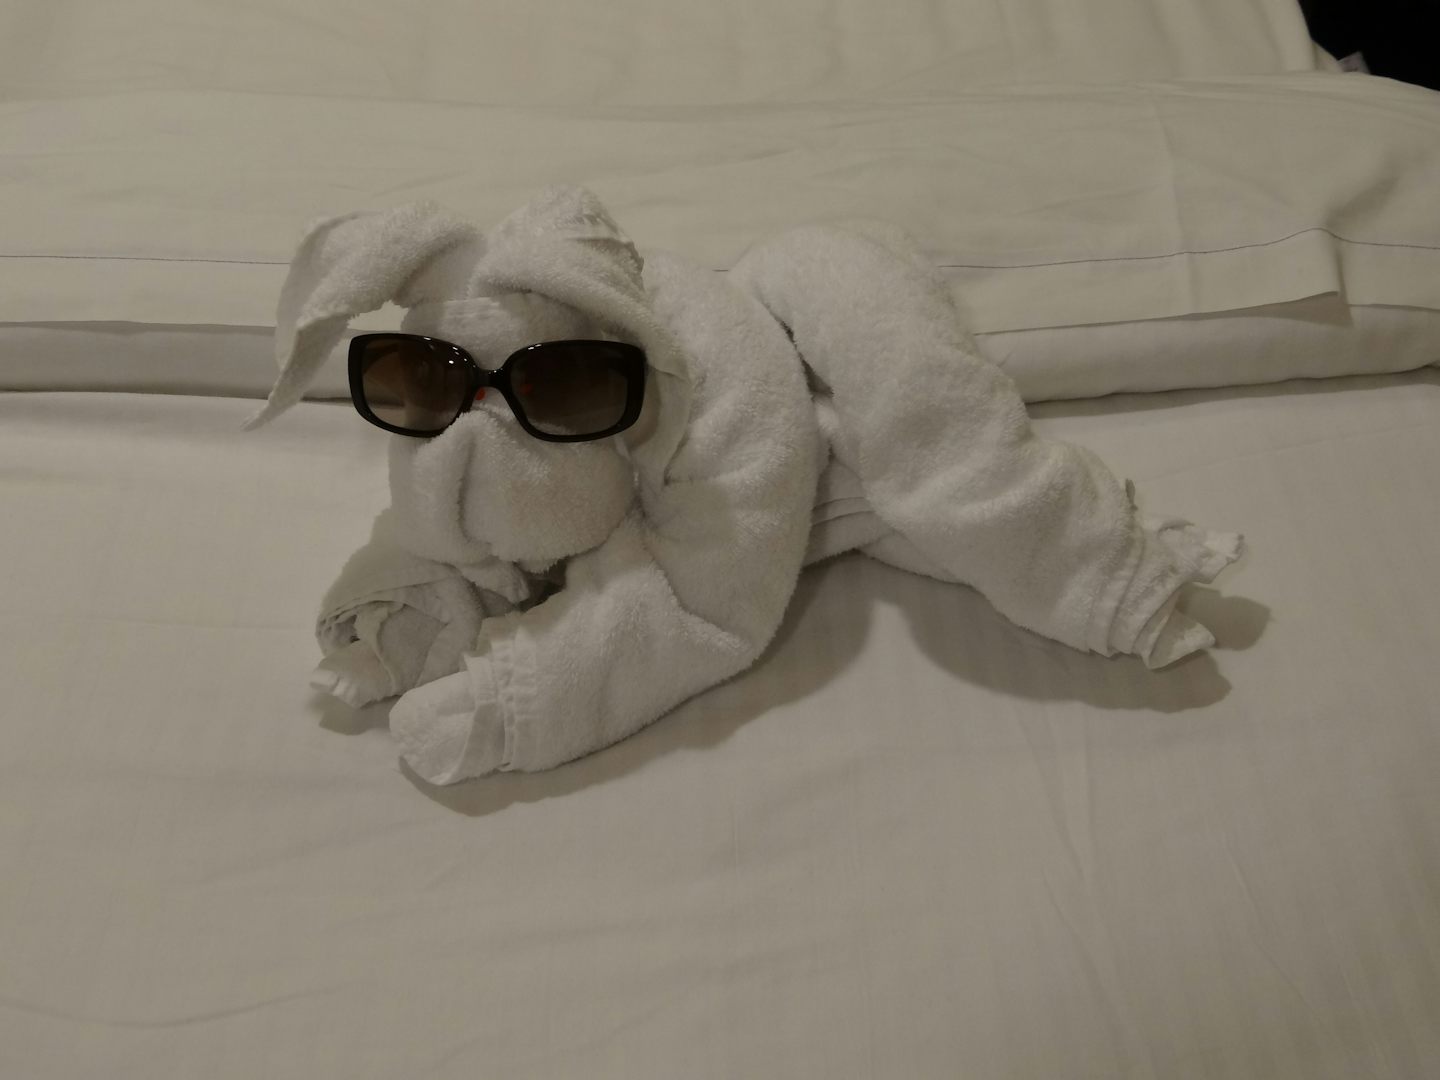 Towel animal in room everyday.